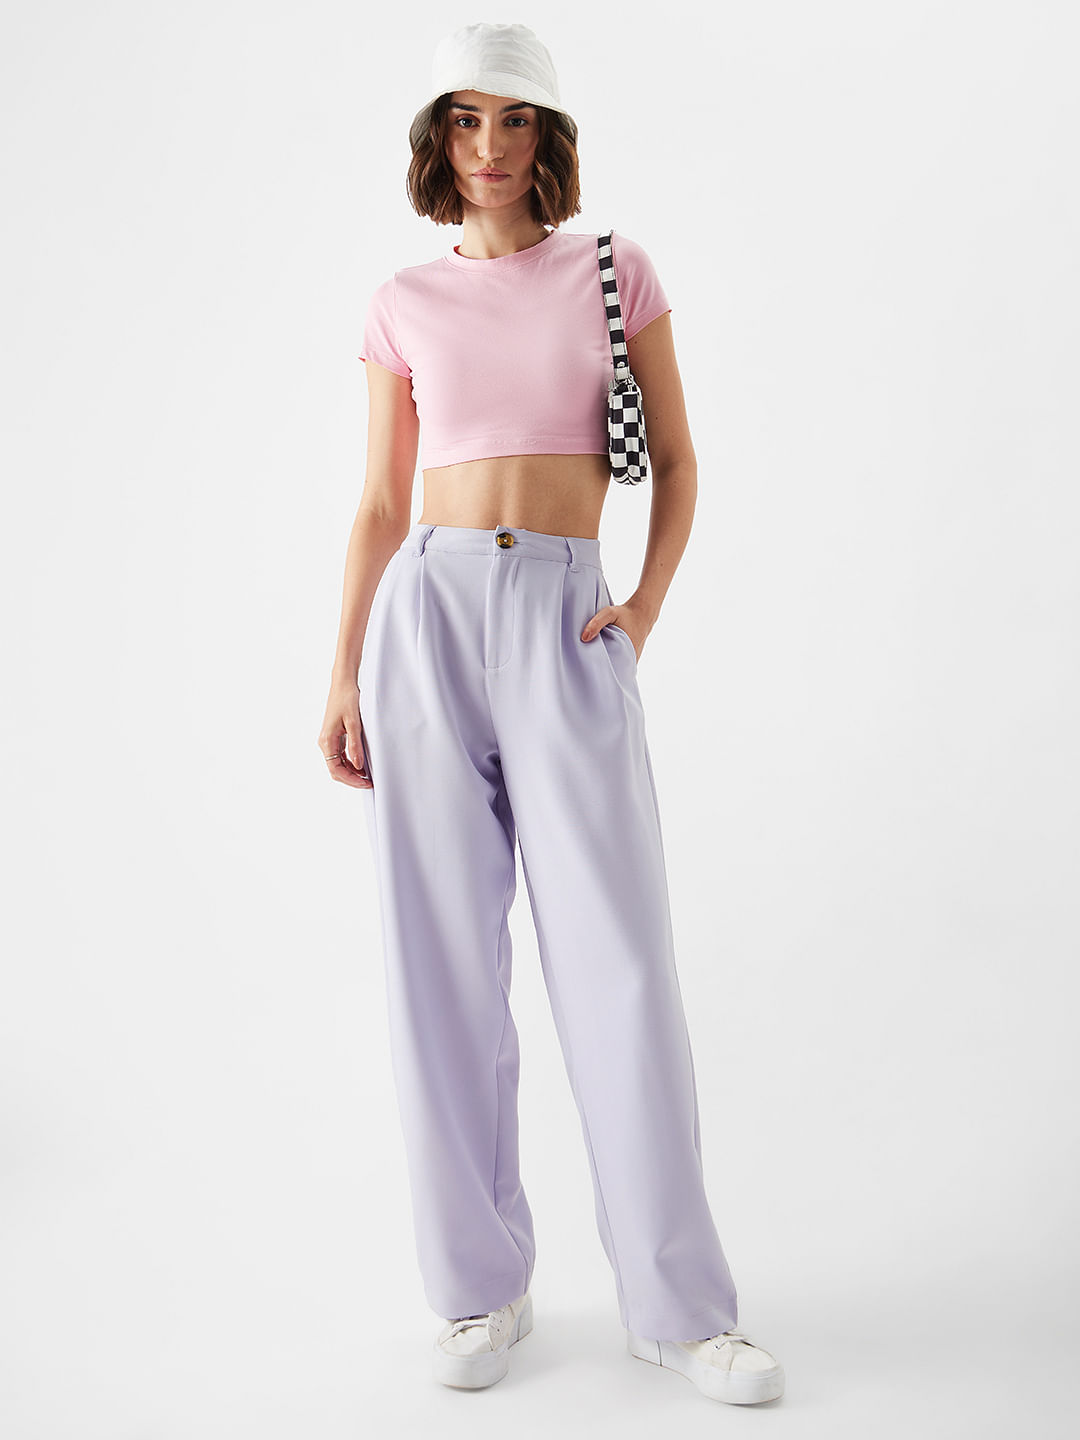 Buy Solids: Lavender Women Pants Online